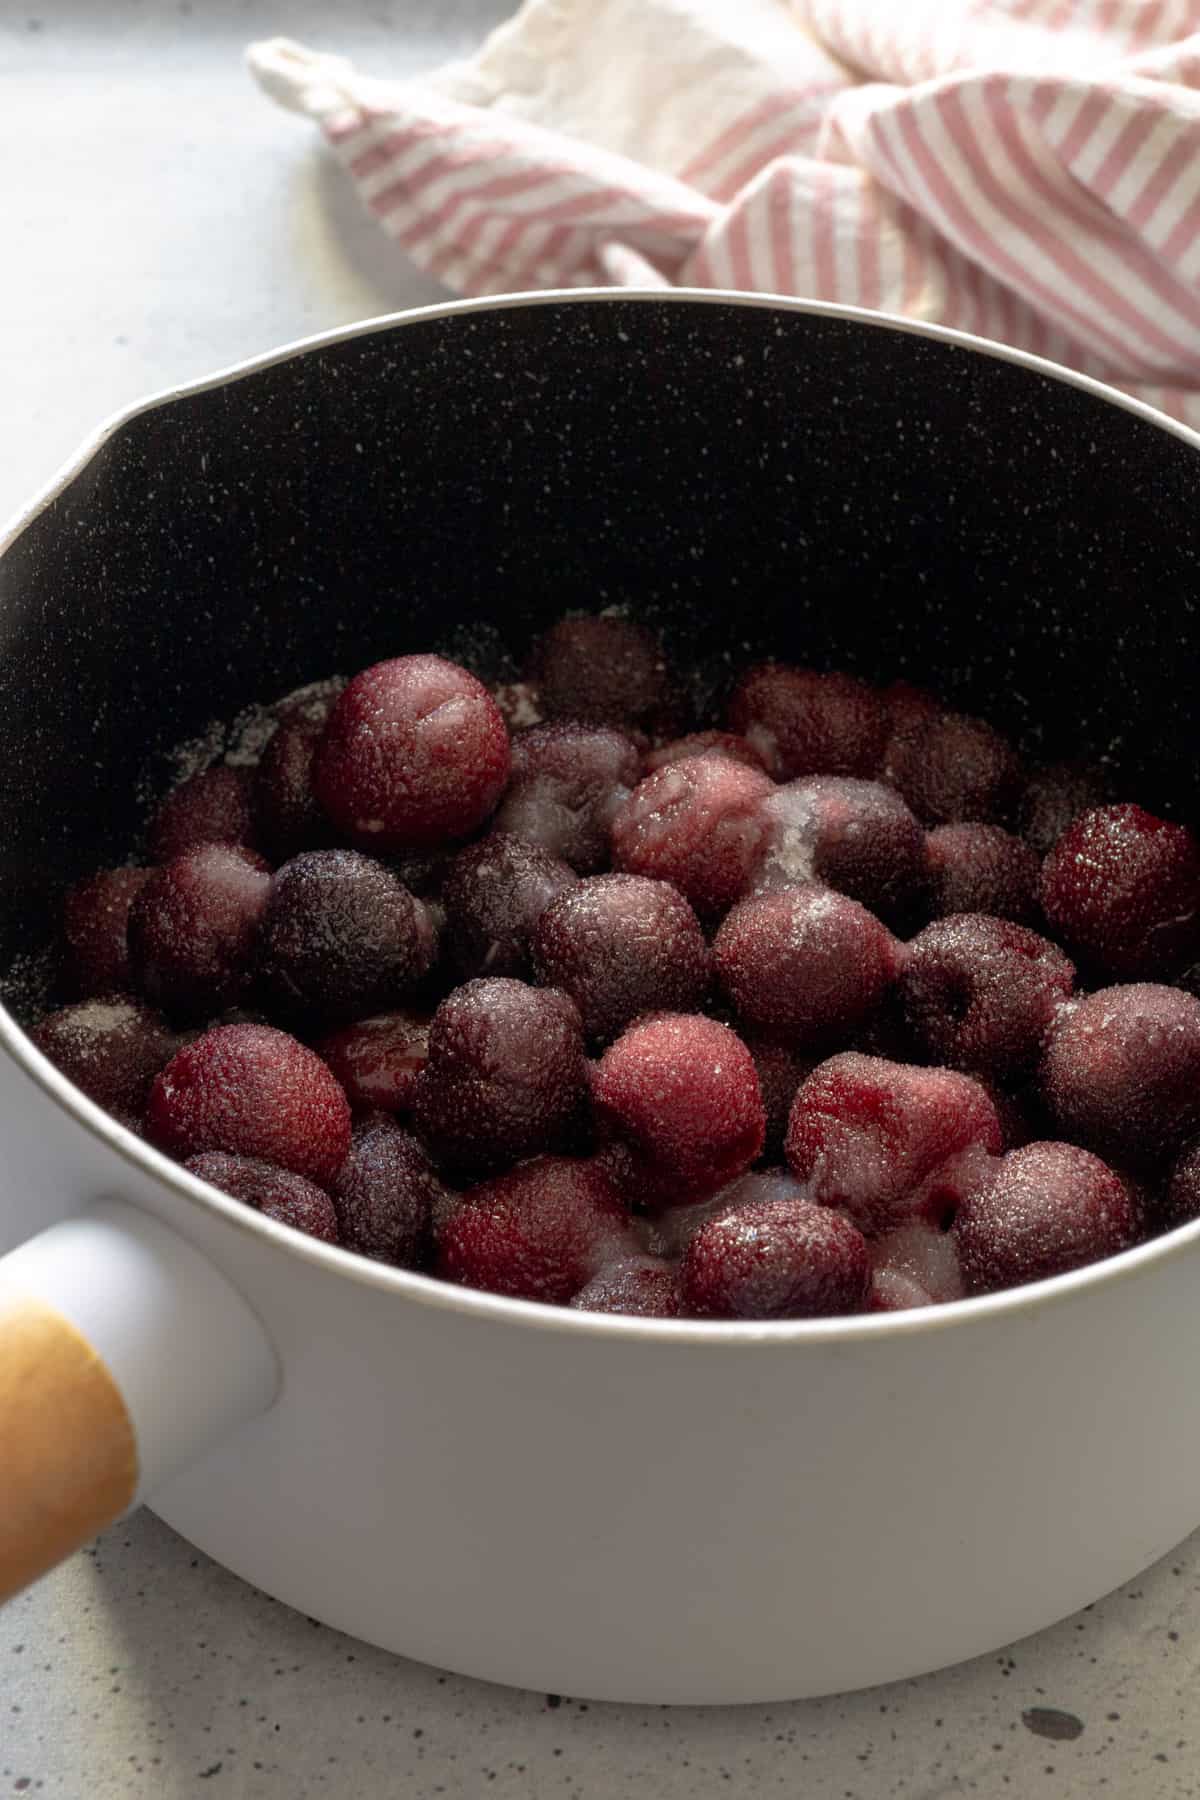 Cherries covered in sugar and lemon juice in a small saucepan.